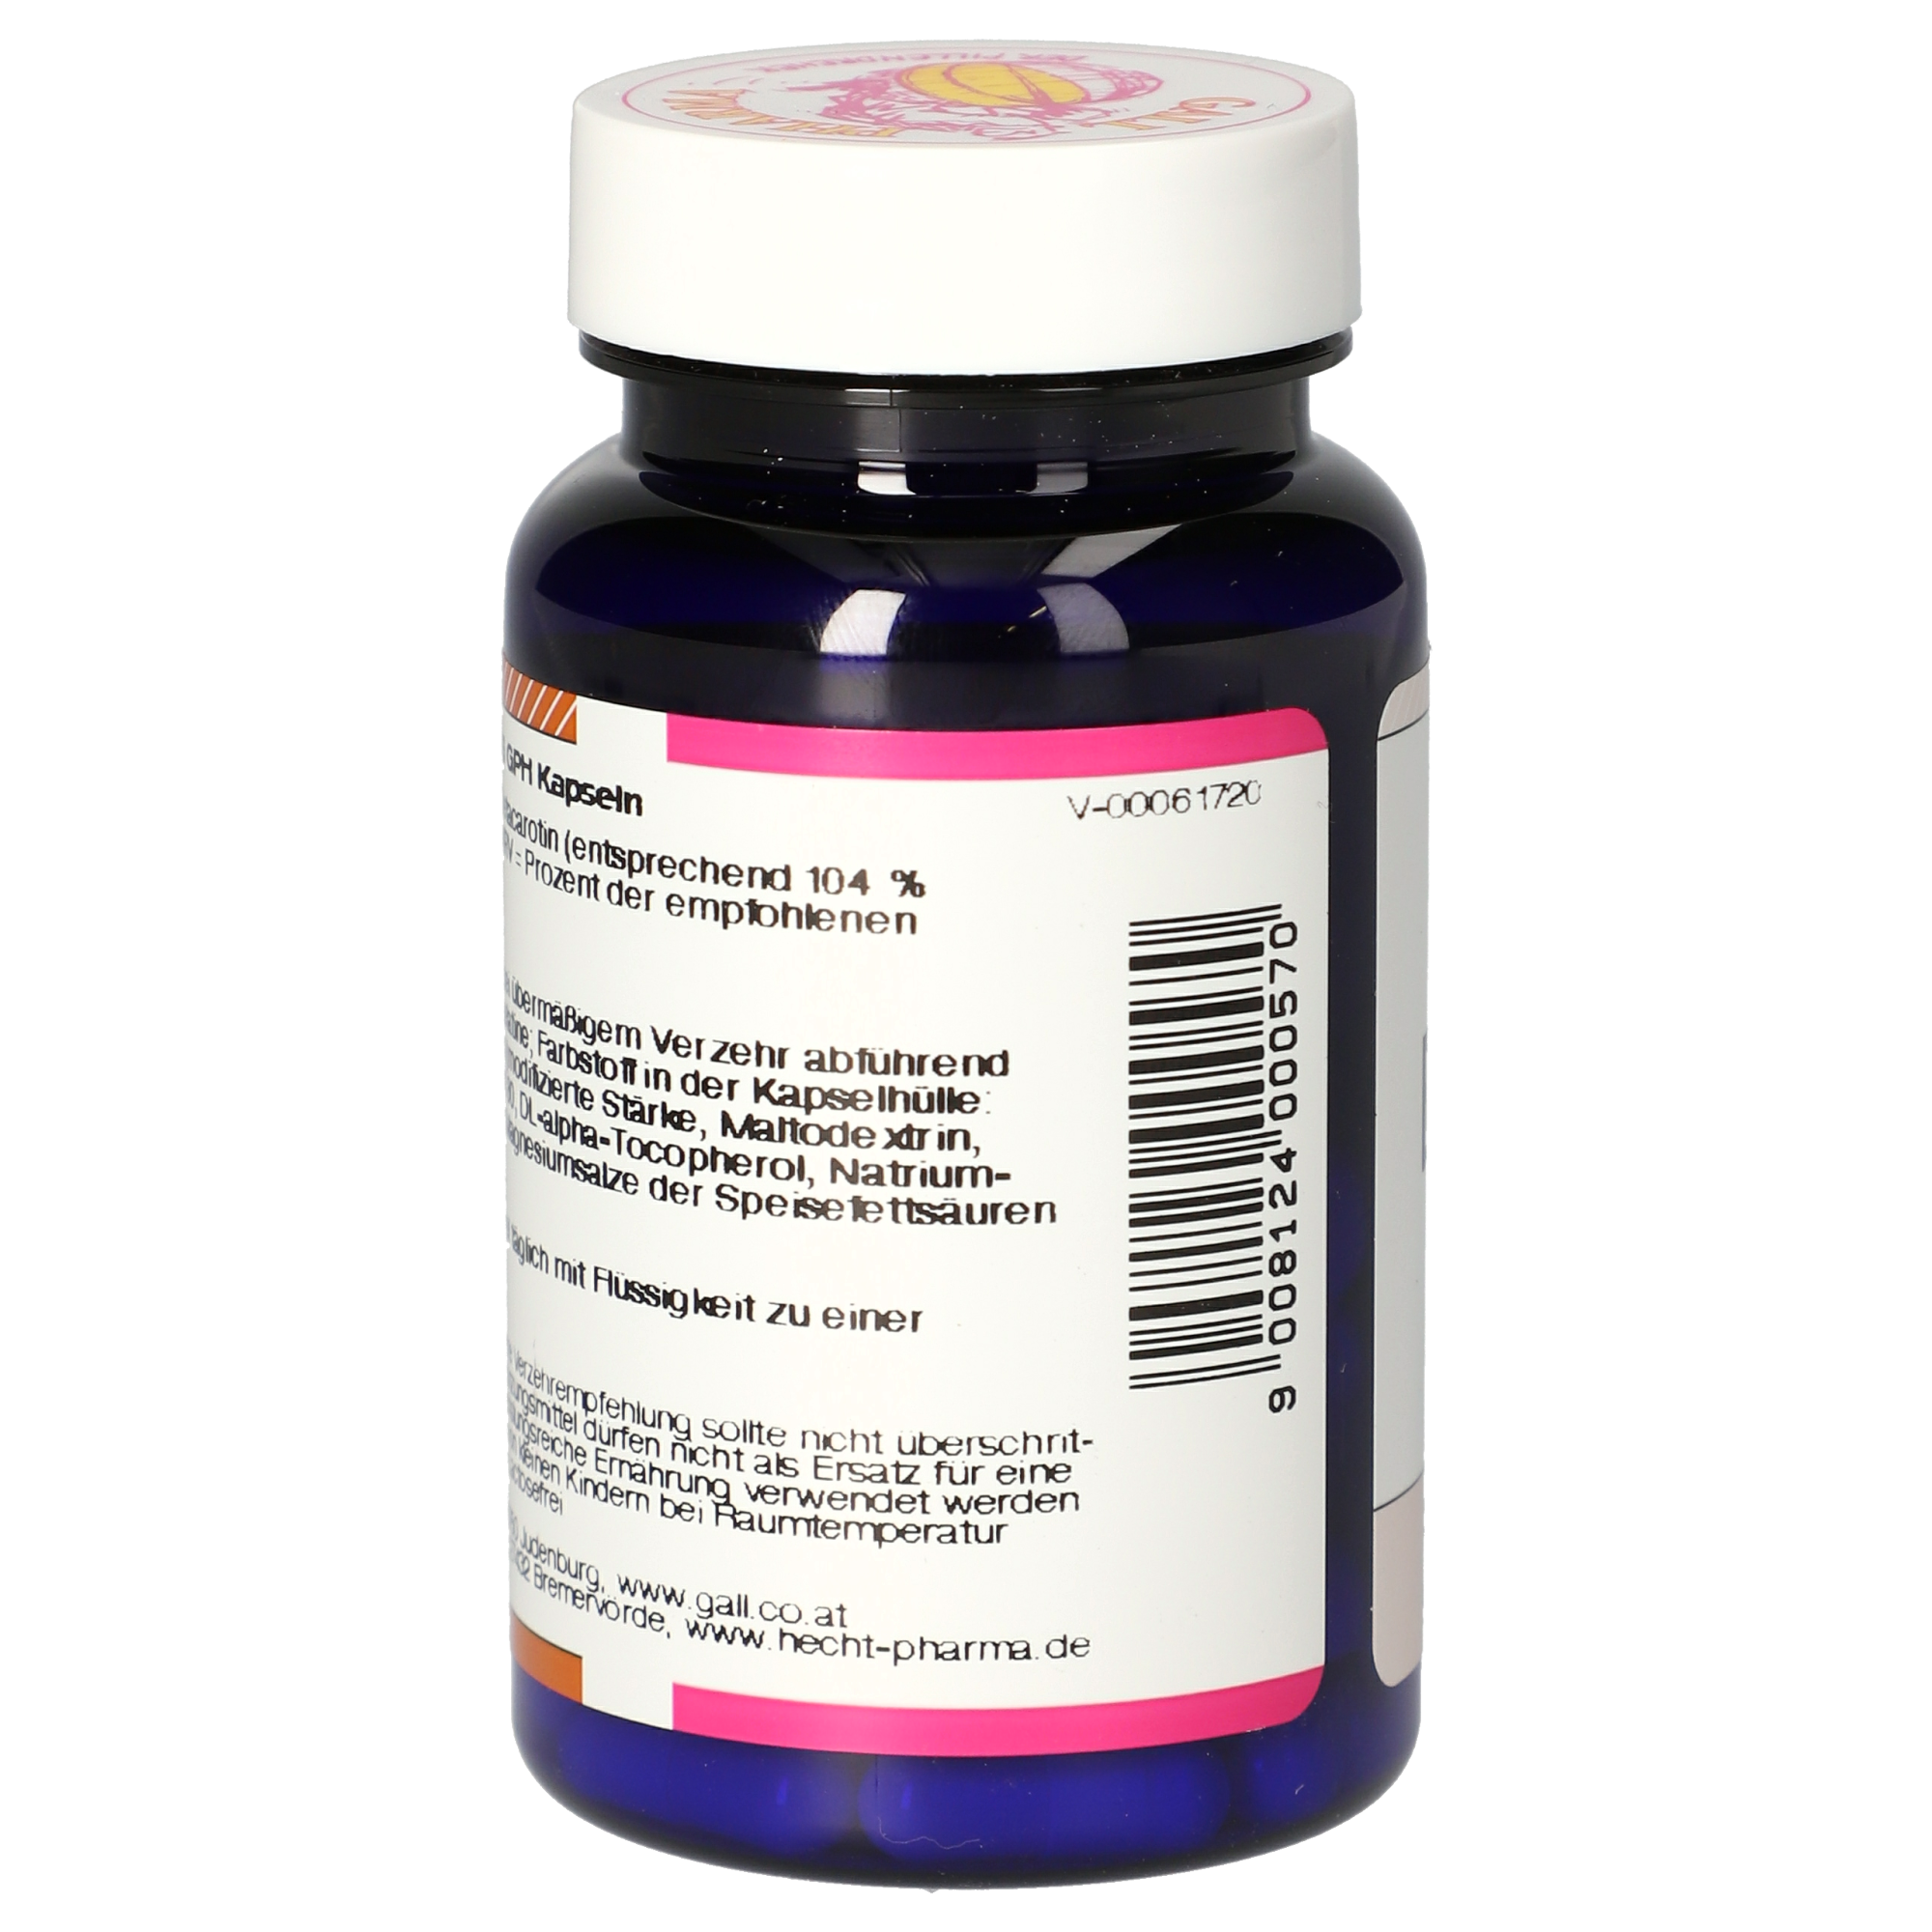 Beta-Carotin 5 mg GPH Kapseln